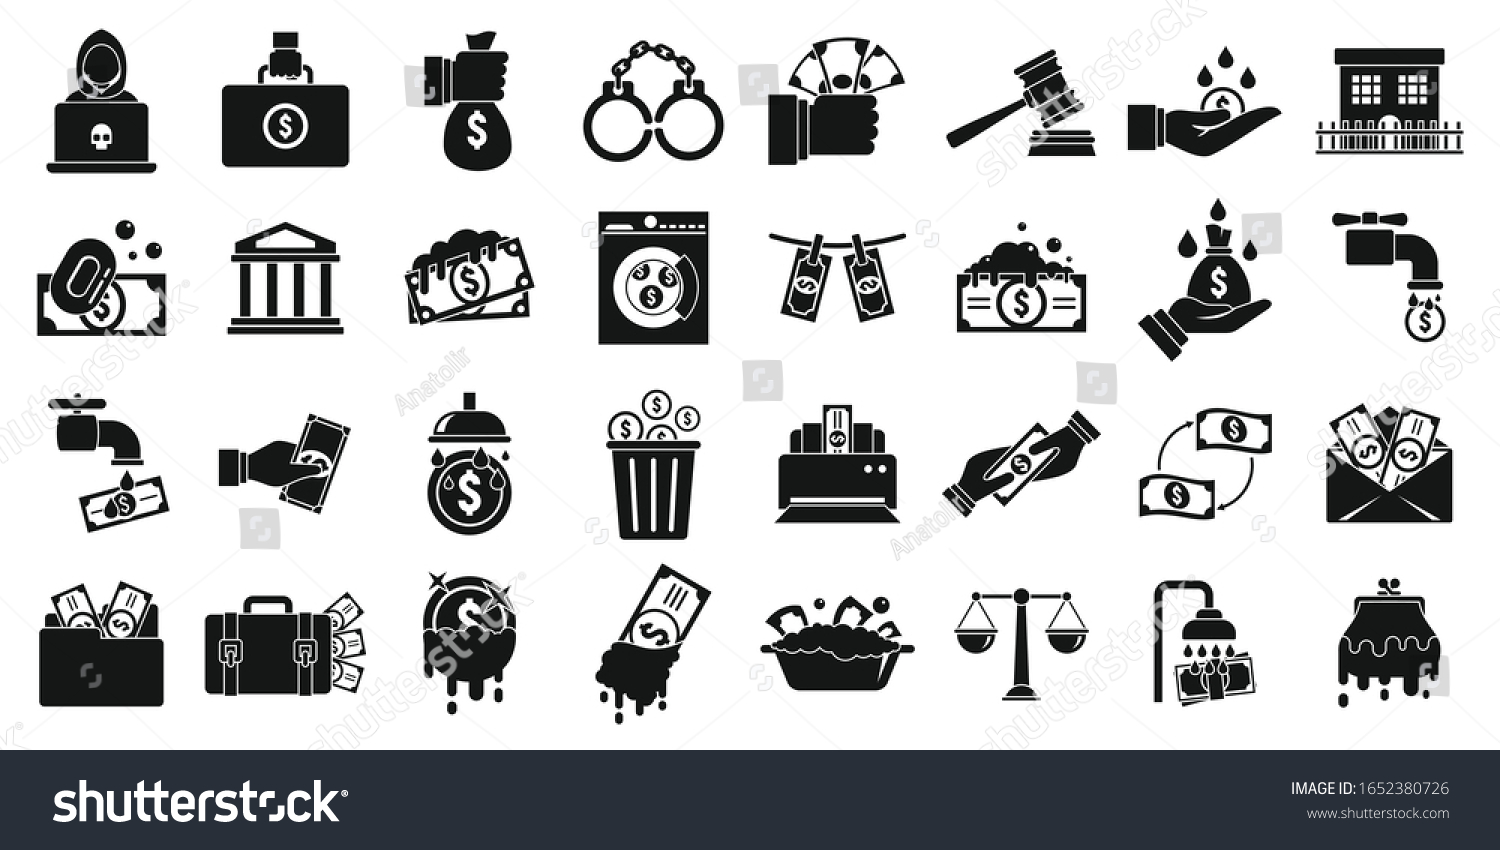 SVG of Money laundering icons set. Simple set of money laundering vector icons for web design on white background svg